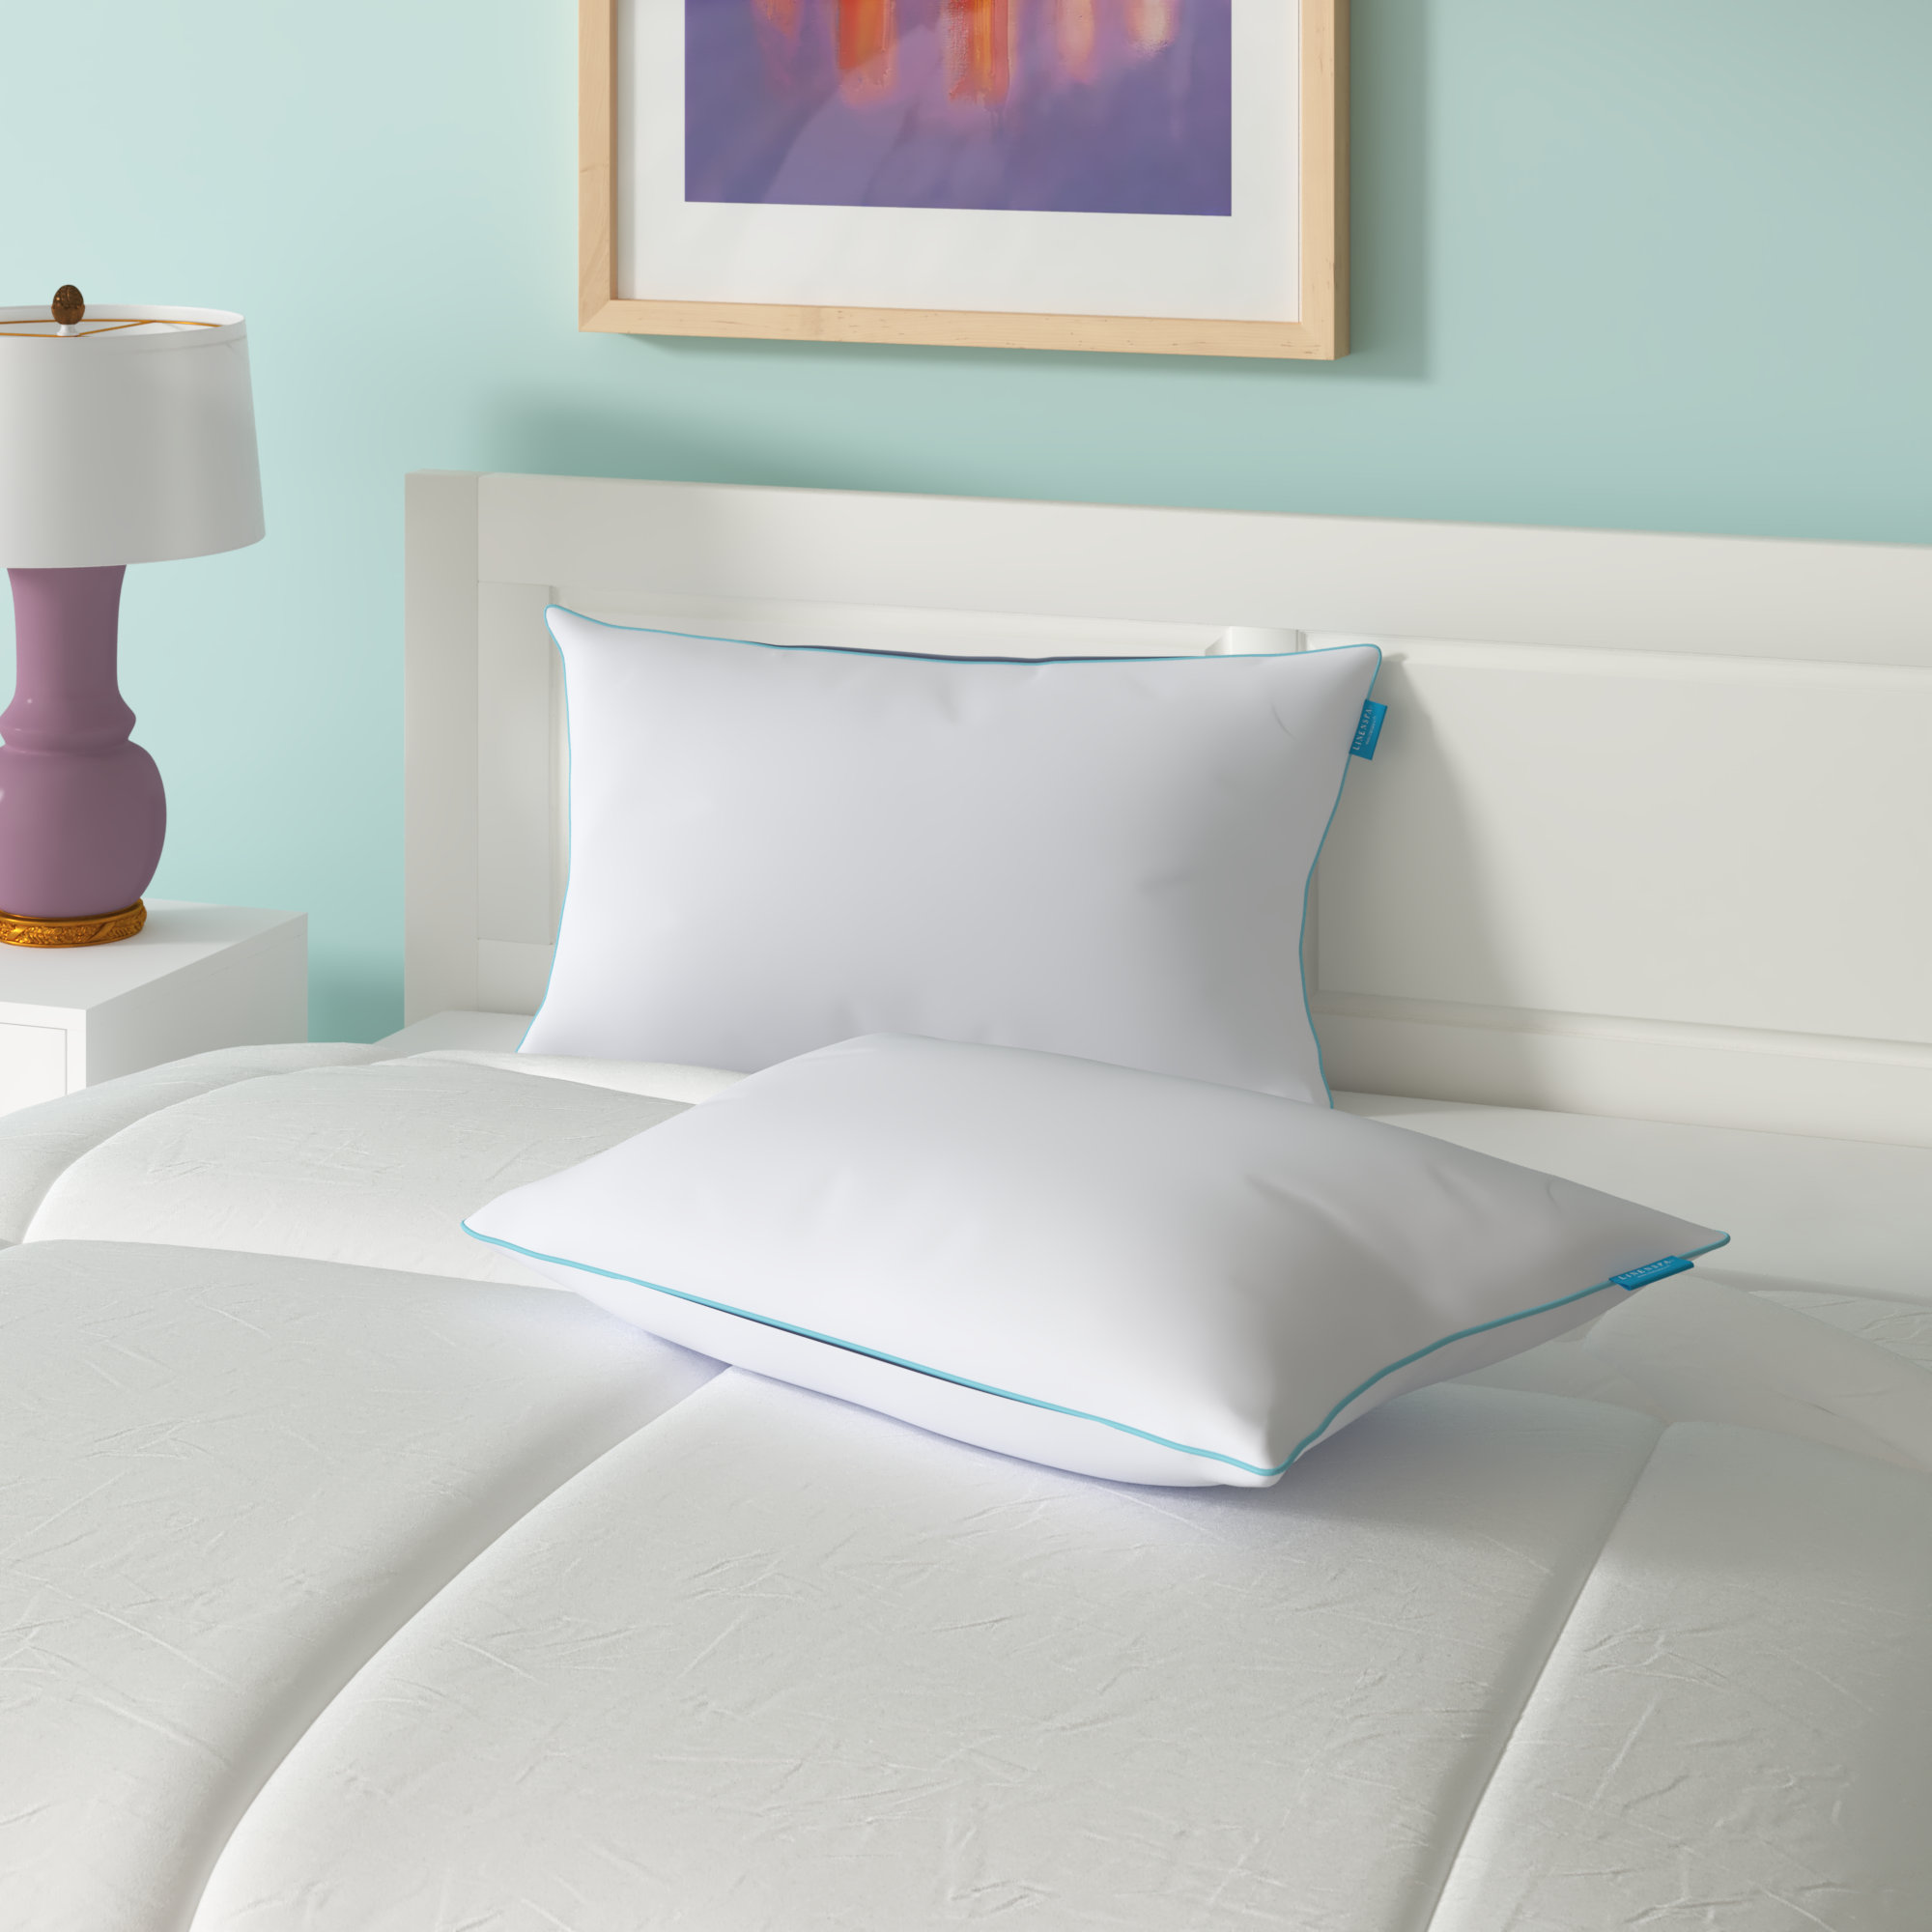 KING SIZE Won't Go Flat Pillows Hypoallergenic Foam Sleep Bed Bedroom Set Of 2 